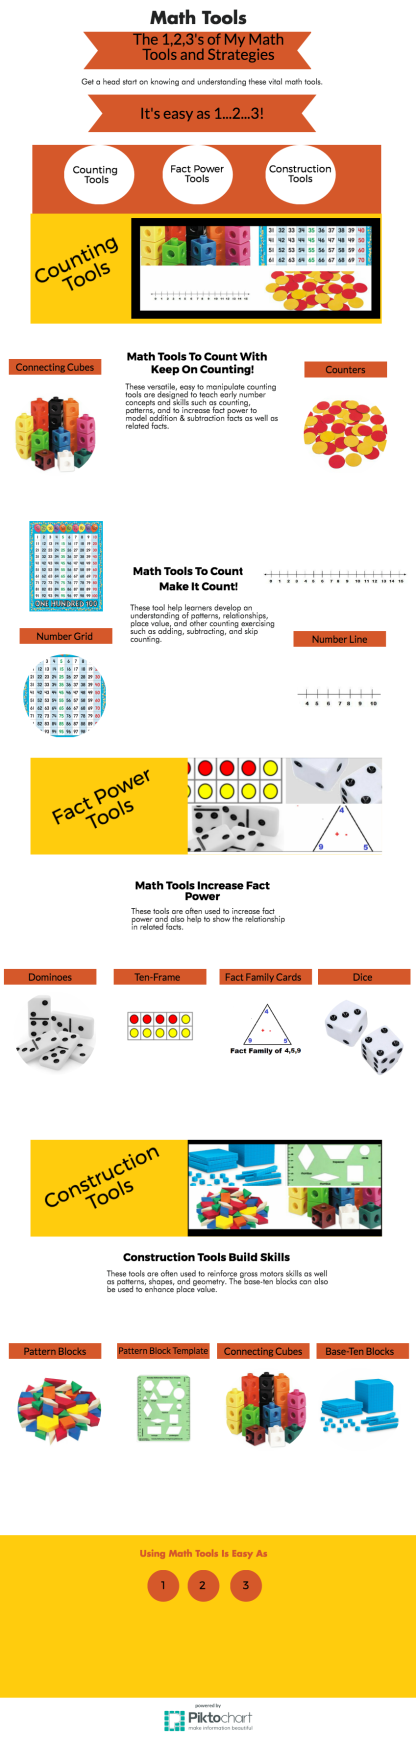 Math Tools Infographic